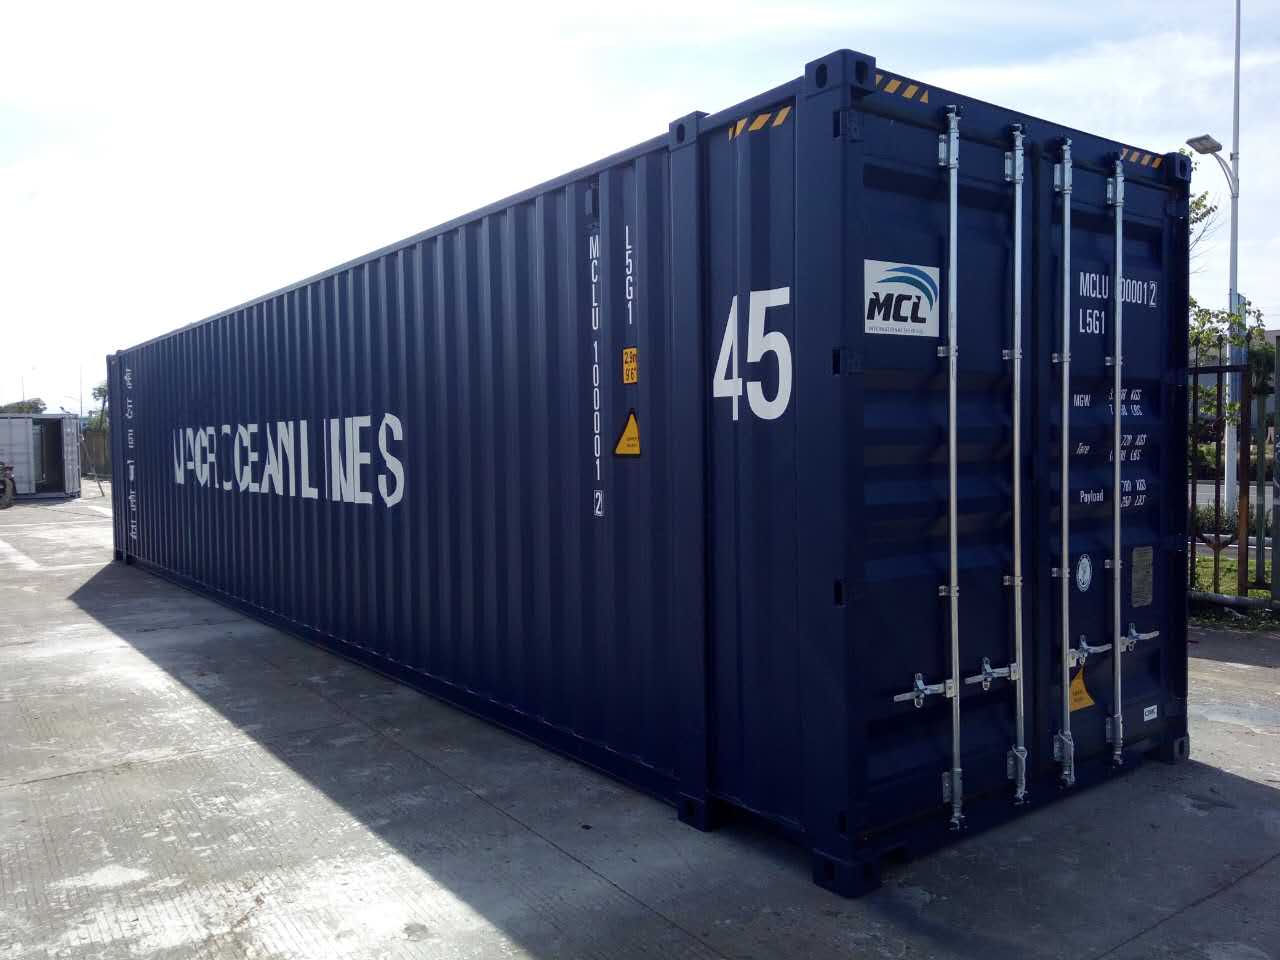 Морской контейнер 45. Морской контейнер 45 футов. Контейнер морской 40 футовый GP. Контейнер 45 футов HC. Высокий 45-футовый: 45 Dry High Container, 45 HC.